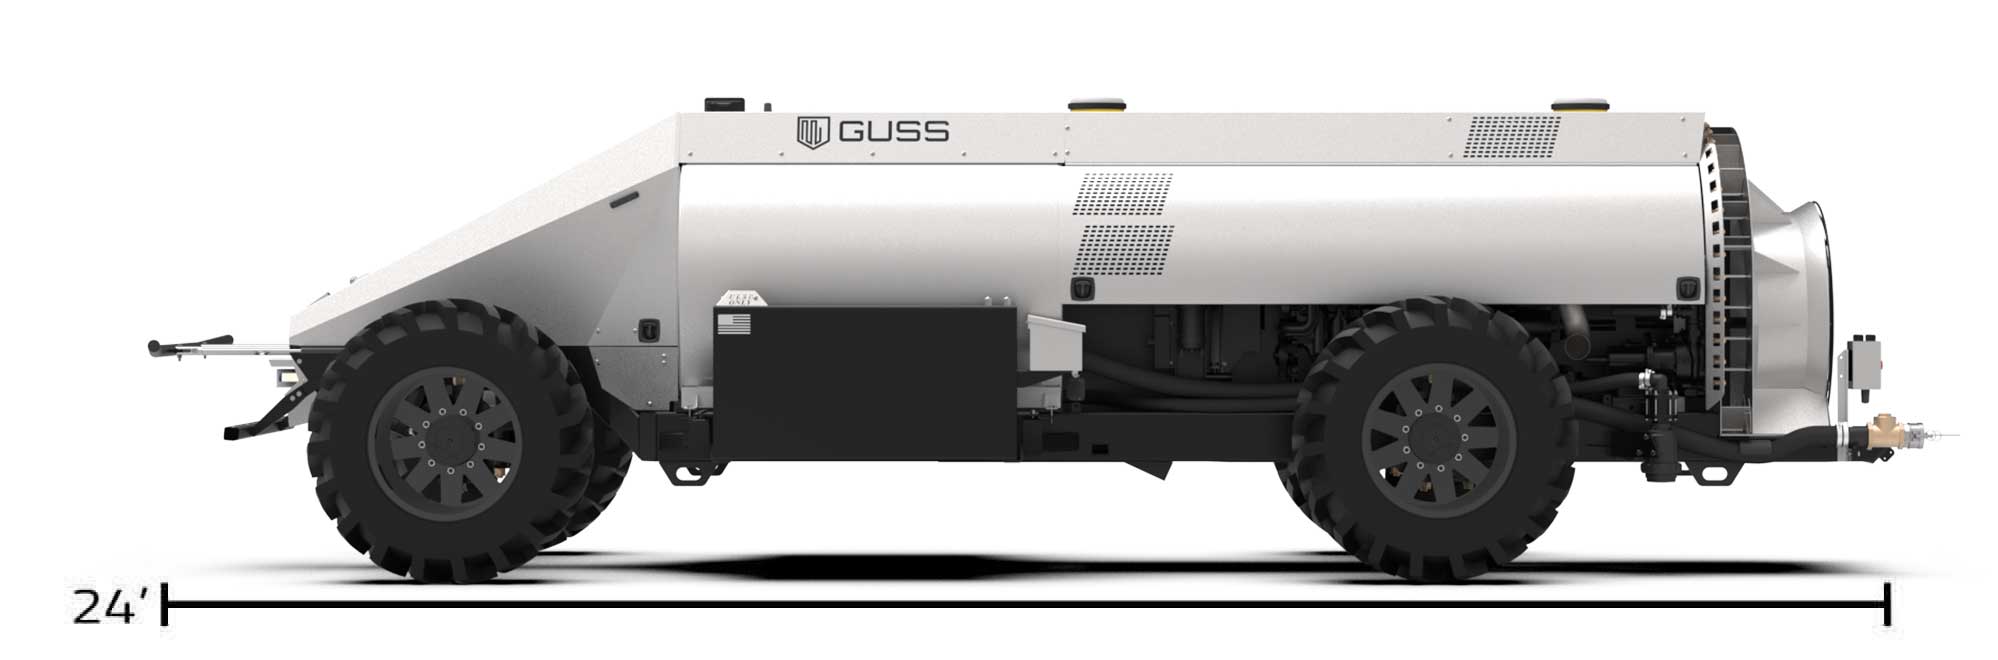 GUSS autonomous sprayer. 24 feet long.